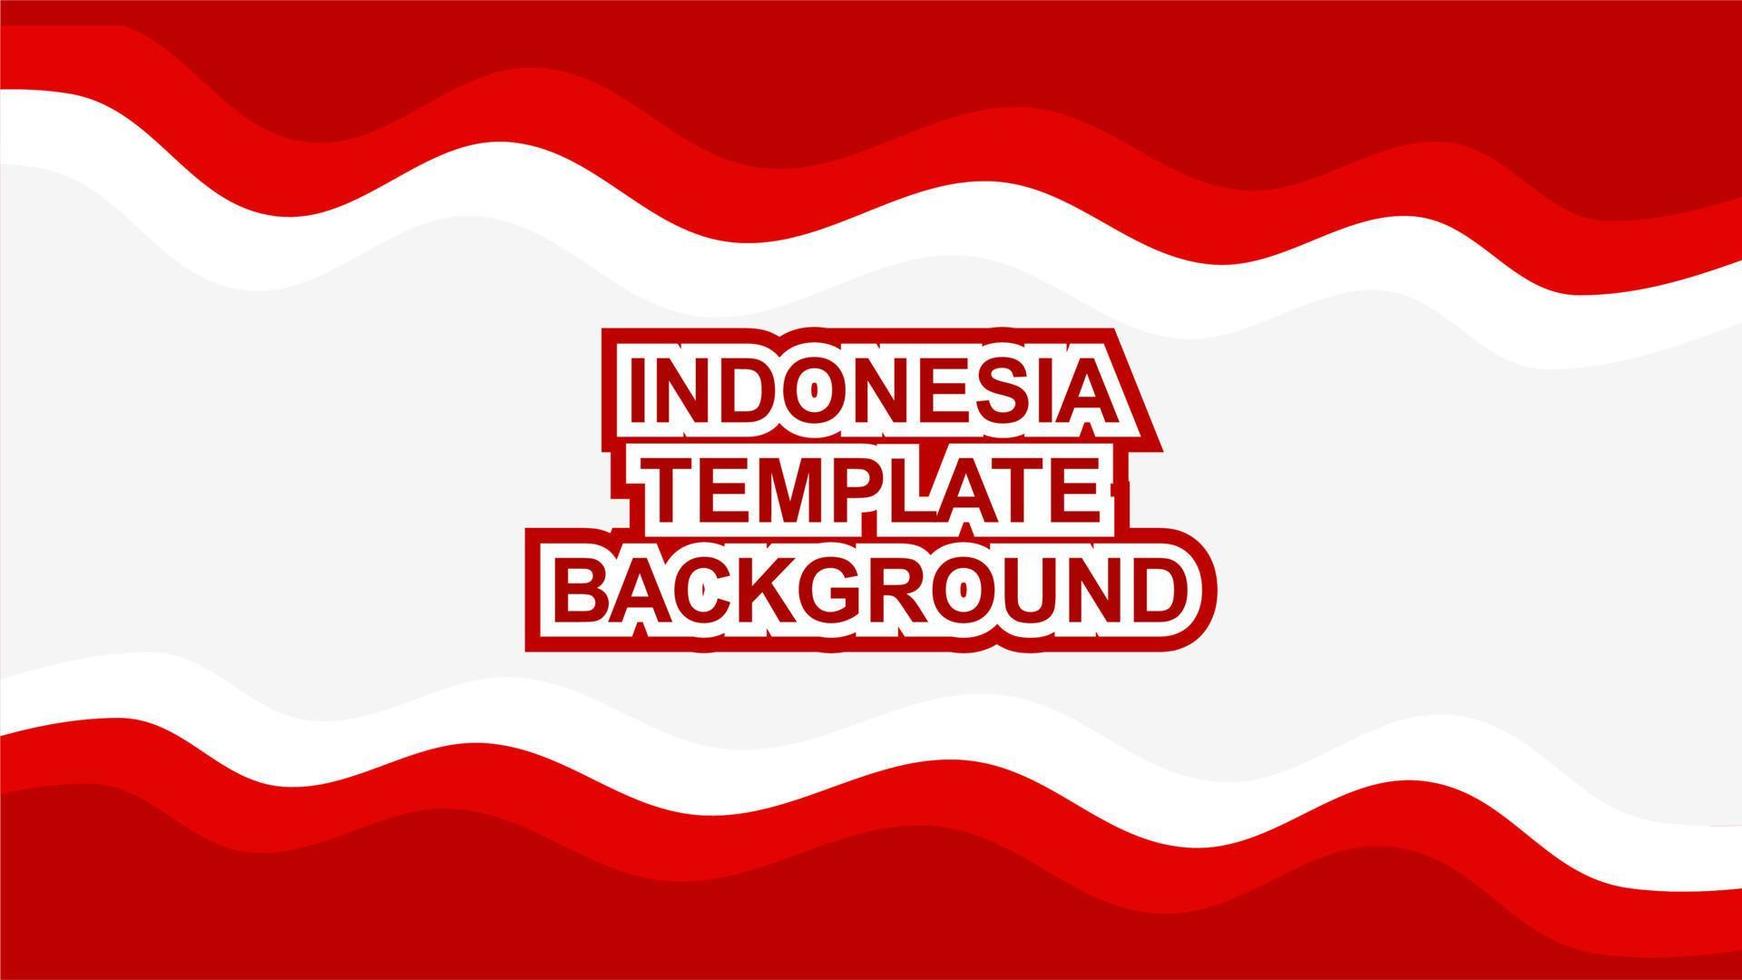 Indonesië vlag sjabloon achtergrond rood wit vector illustratie